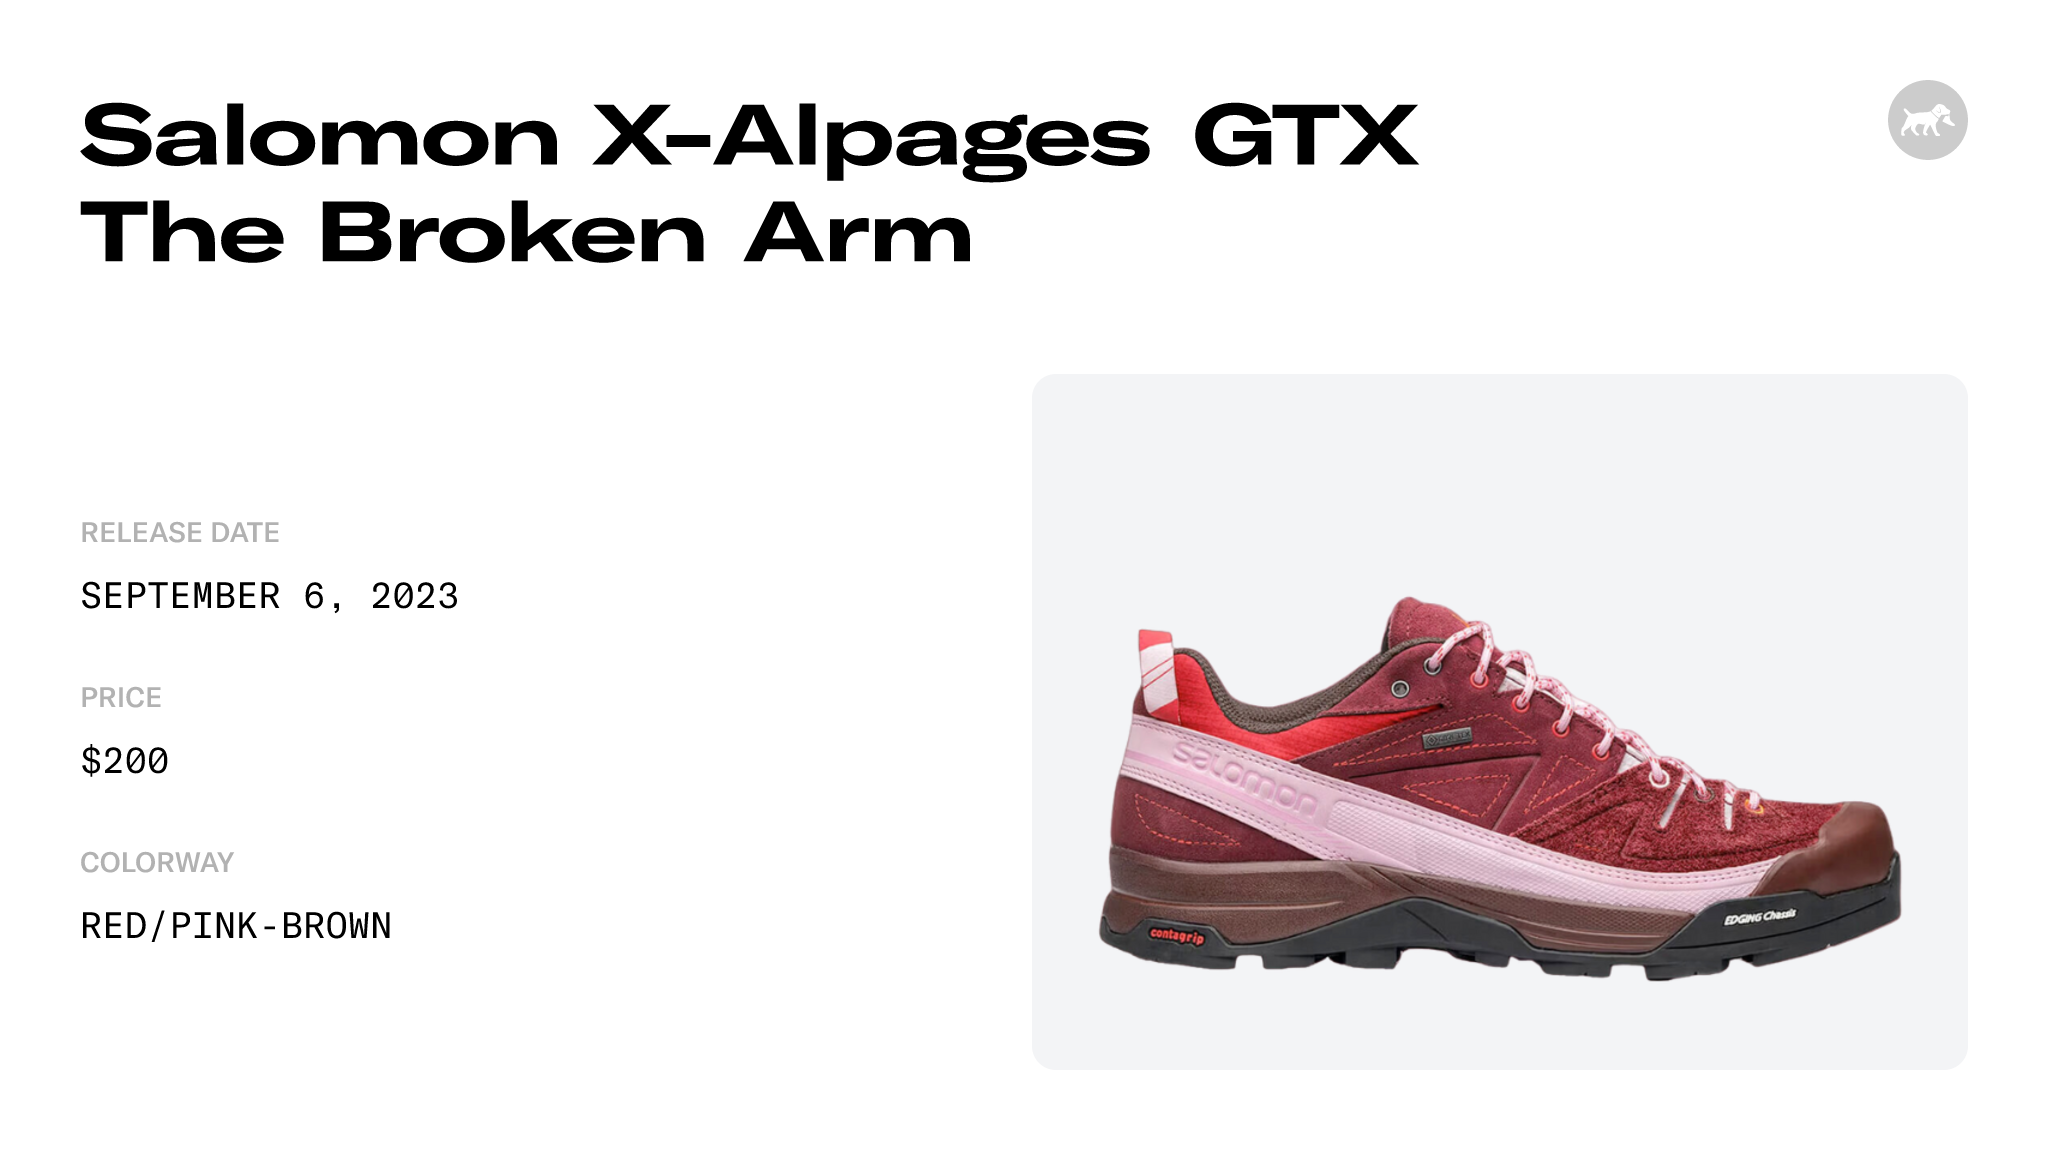 Salomon X-Alpages GTX The Broken Arm Raffles and Release Date